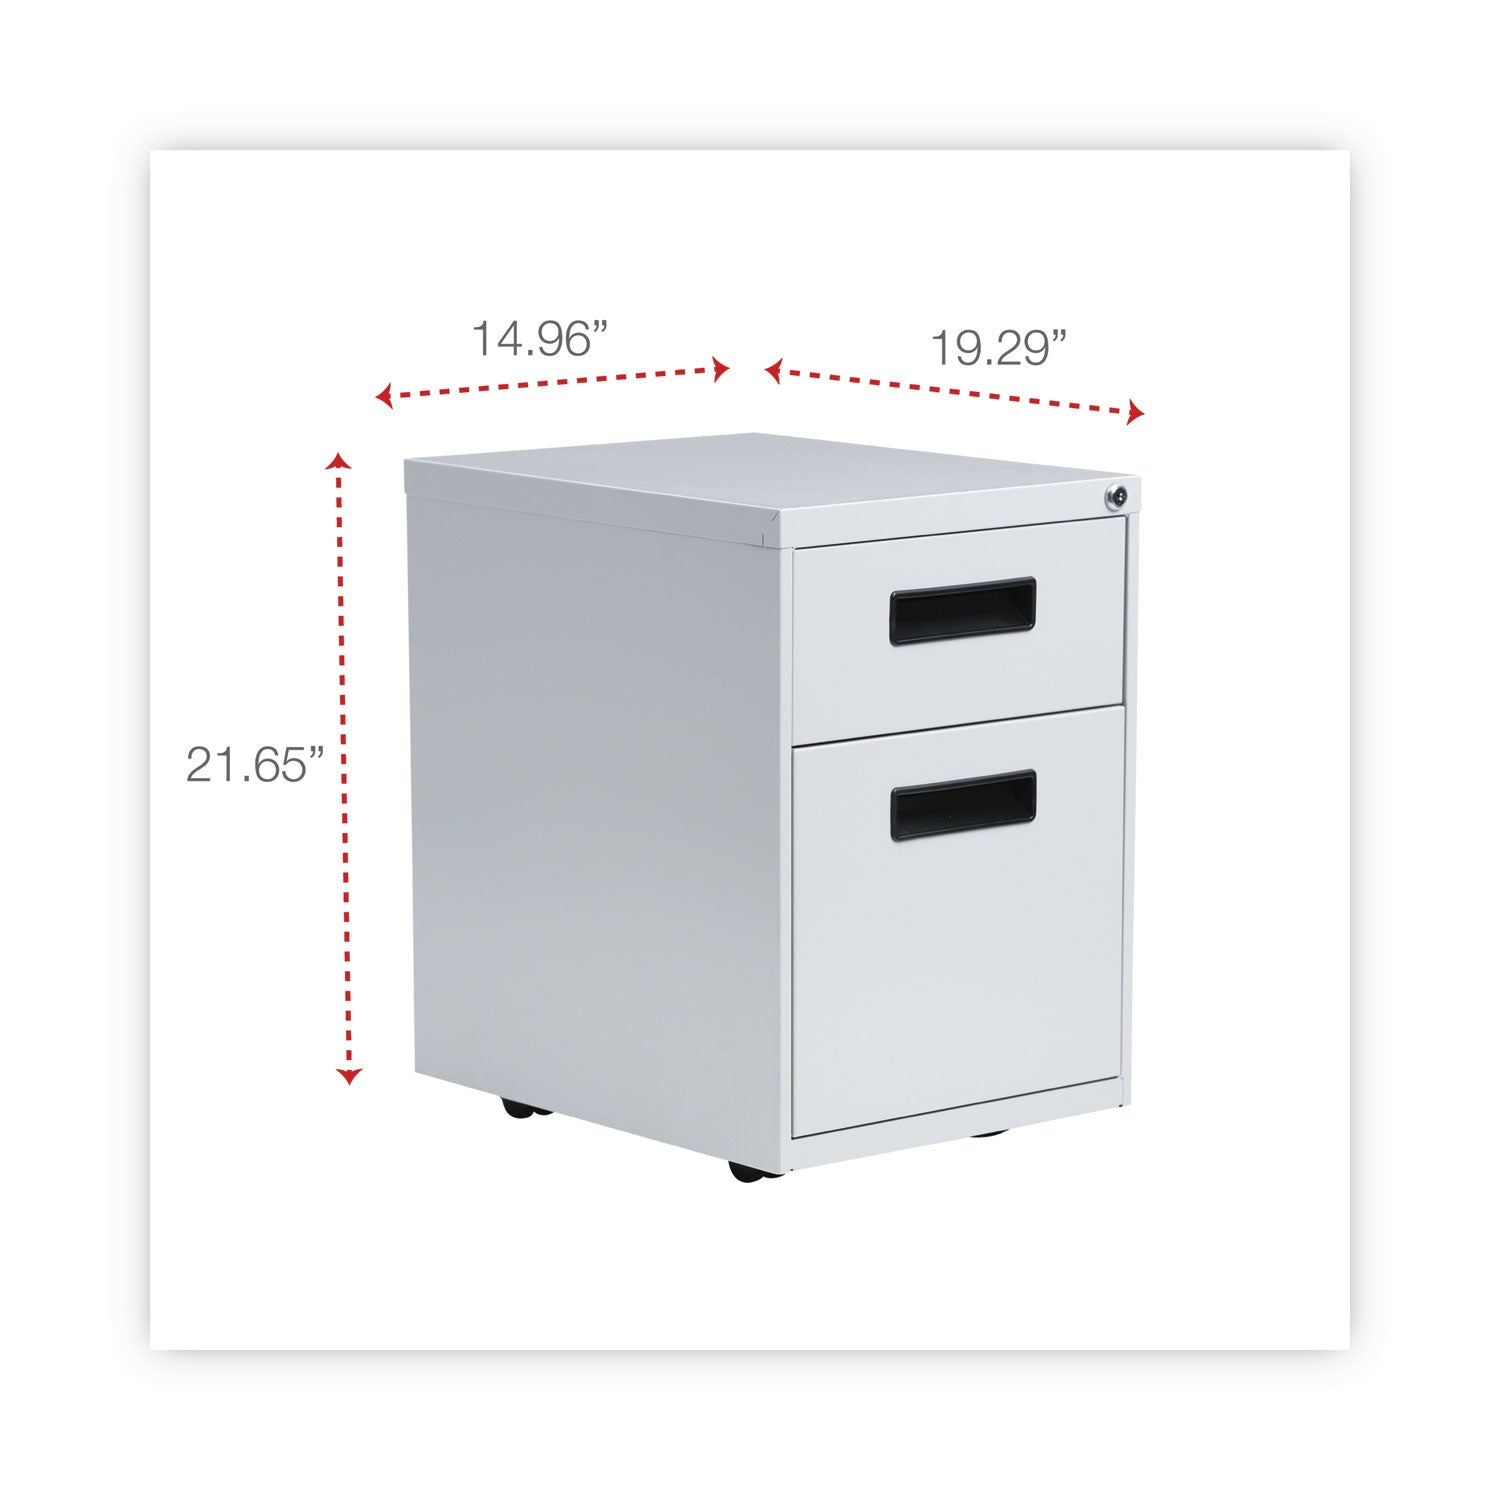 file-pedestal-left-or-right-2-drawers-box-file-legal-letter-light-gray-1496-x-1929-x-2165_alepabflg - 3